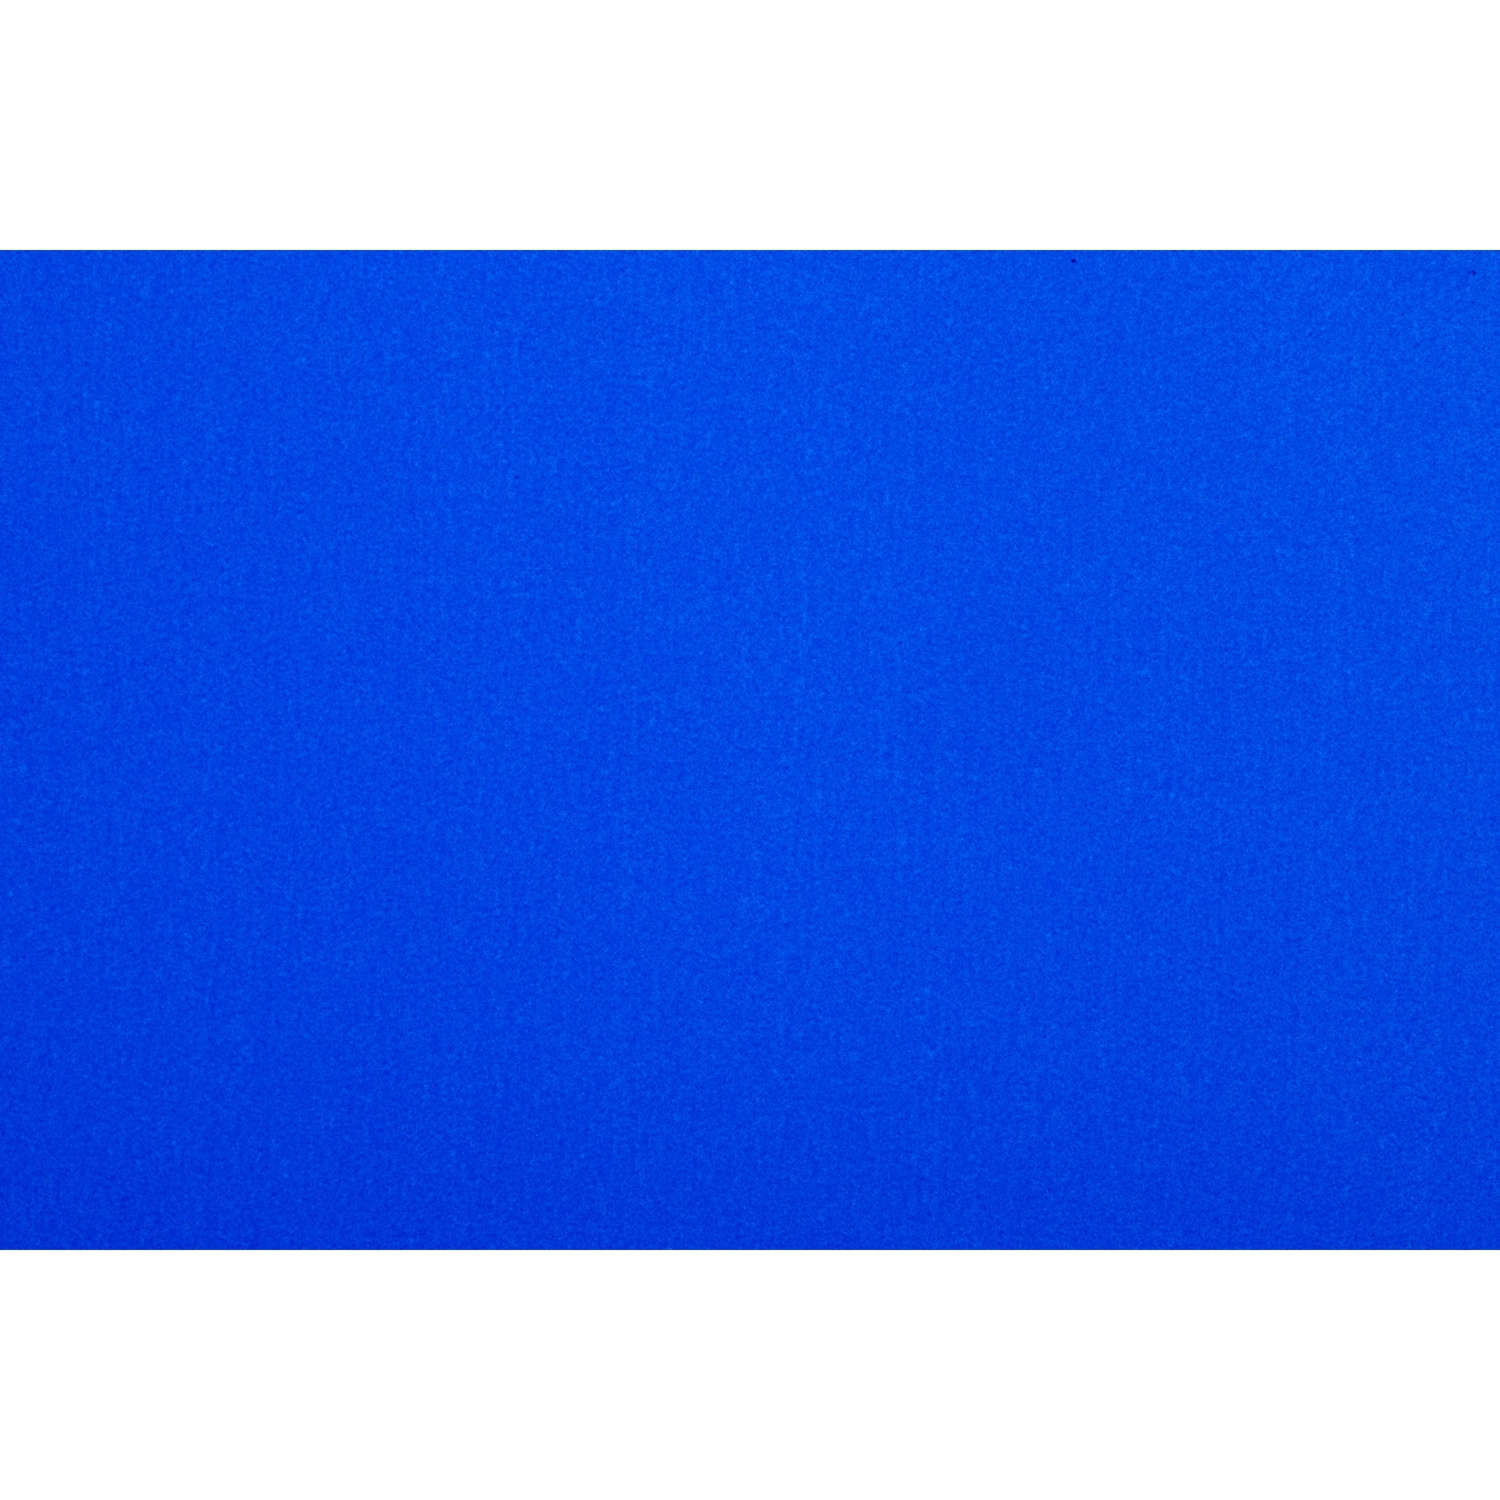 Slater Harrison Colourcard - Ultra Blue Image